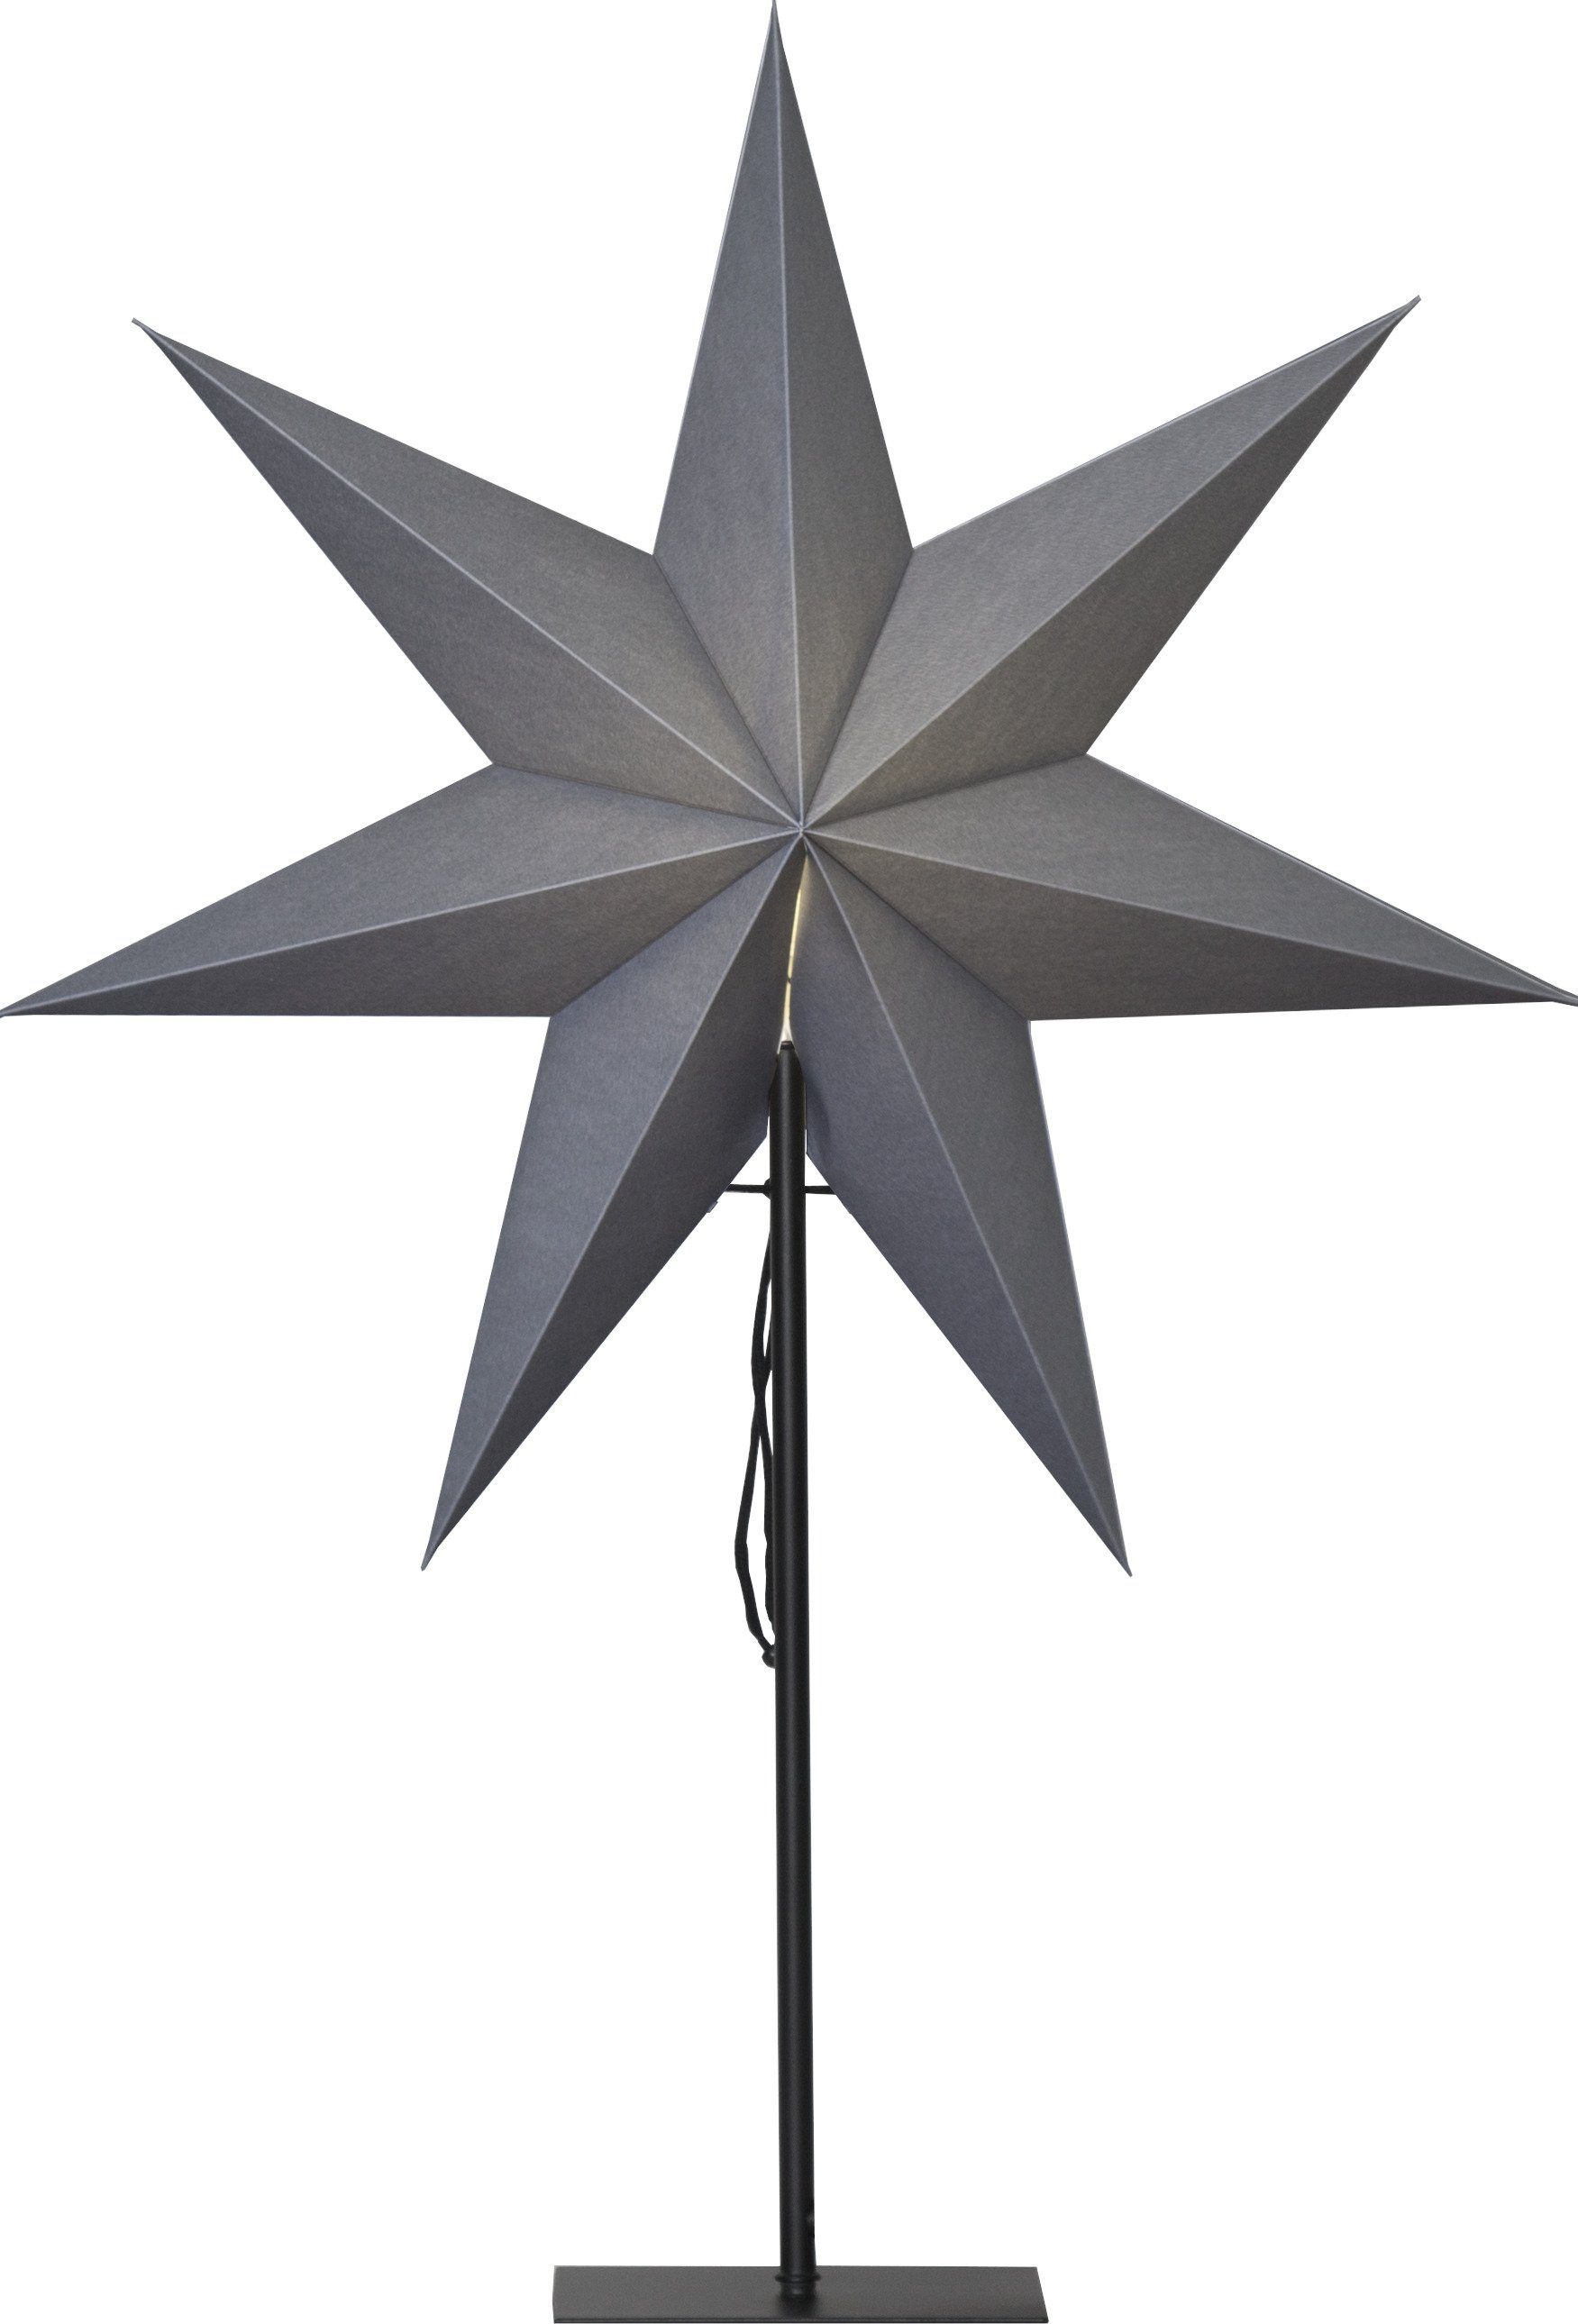 STAR TRADING LED Stern 7-zackig Weihnachtsstern stehend 75cm E14 Kabel Papierstern inkl. grau